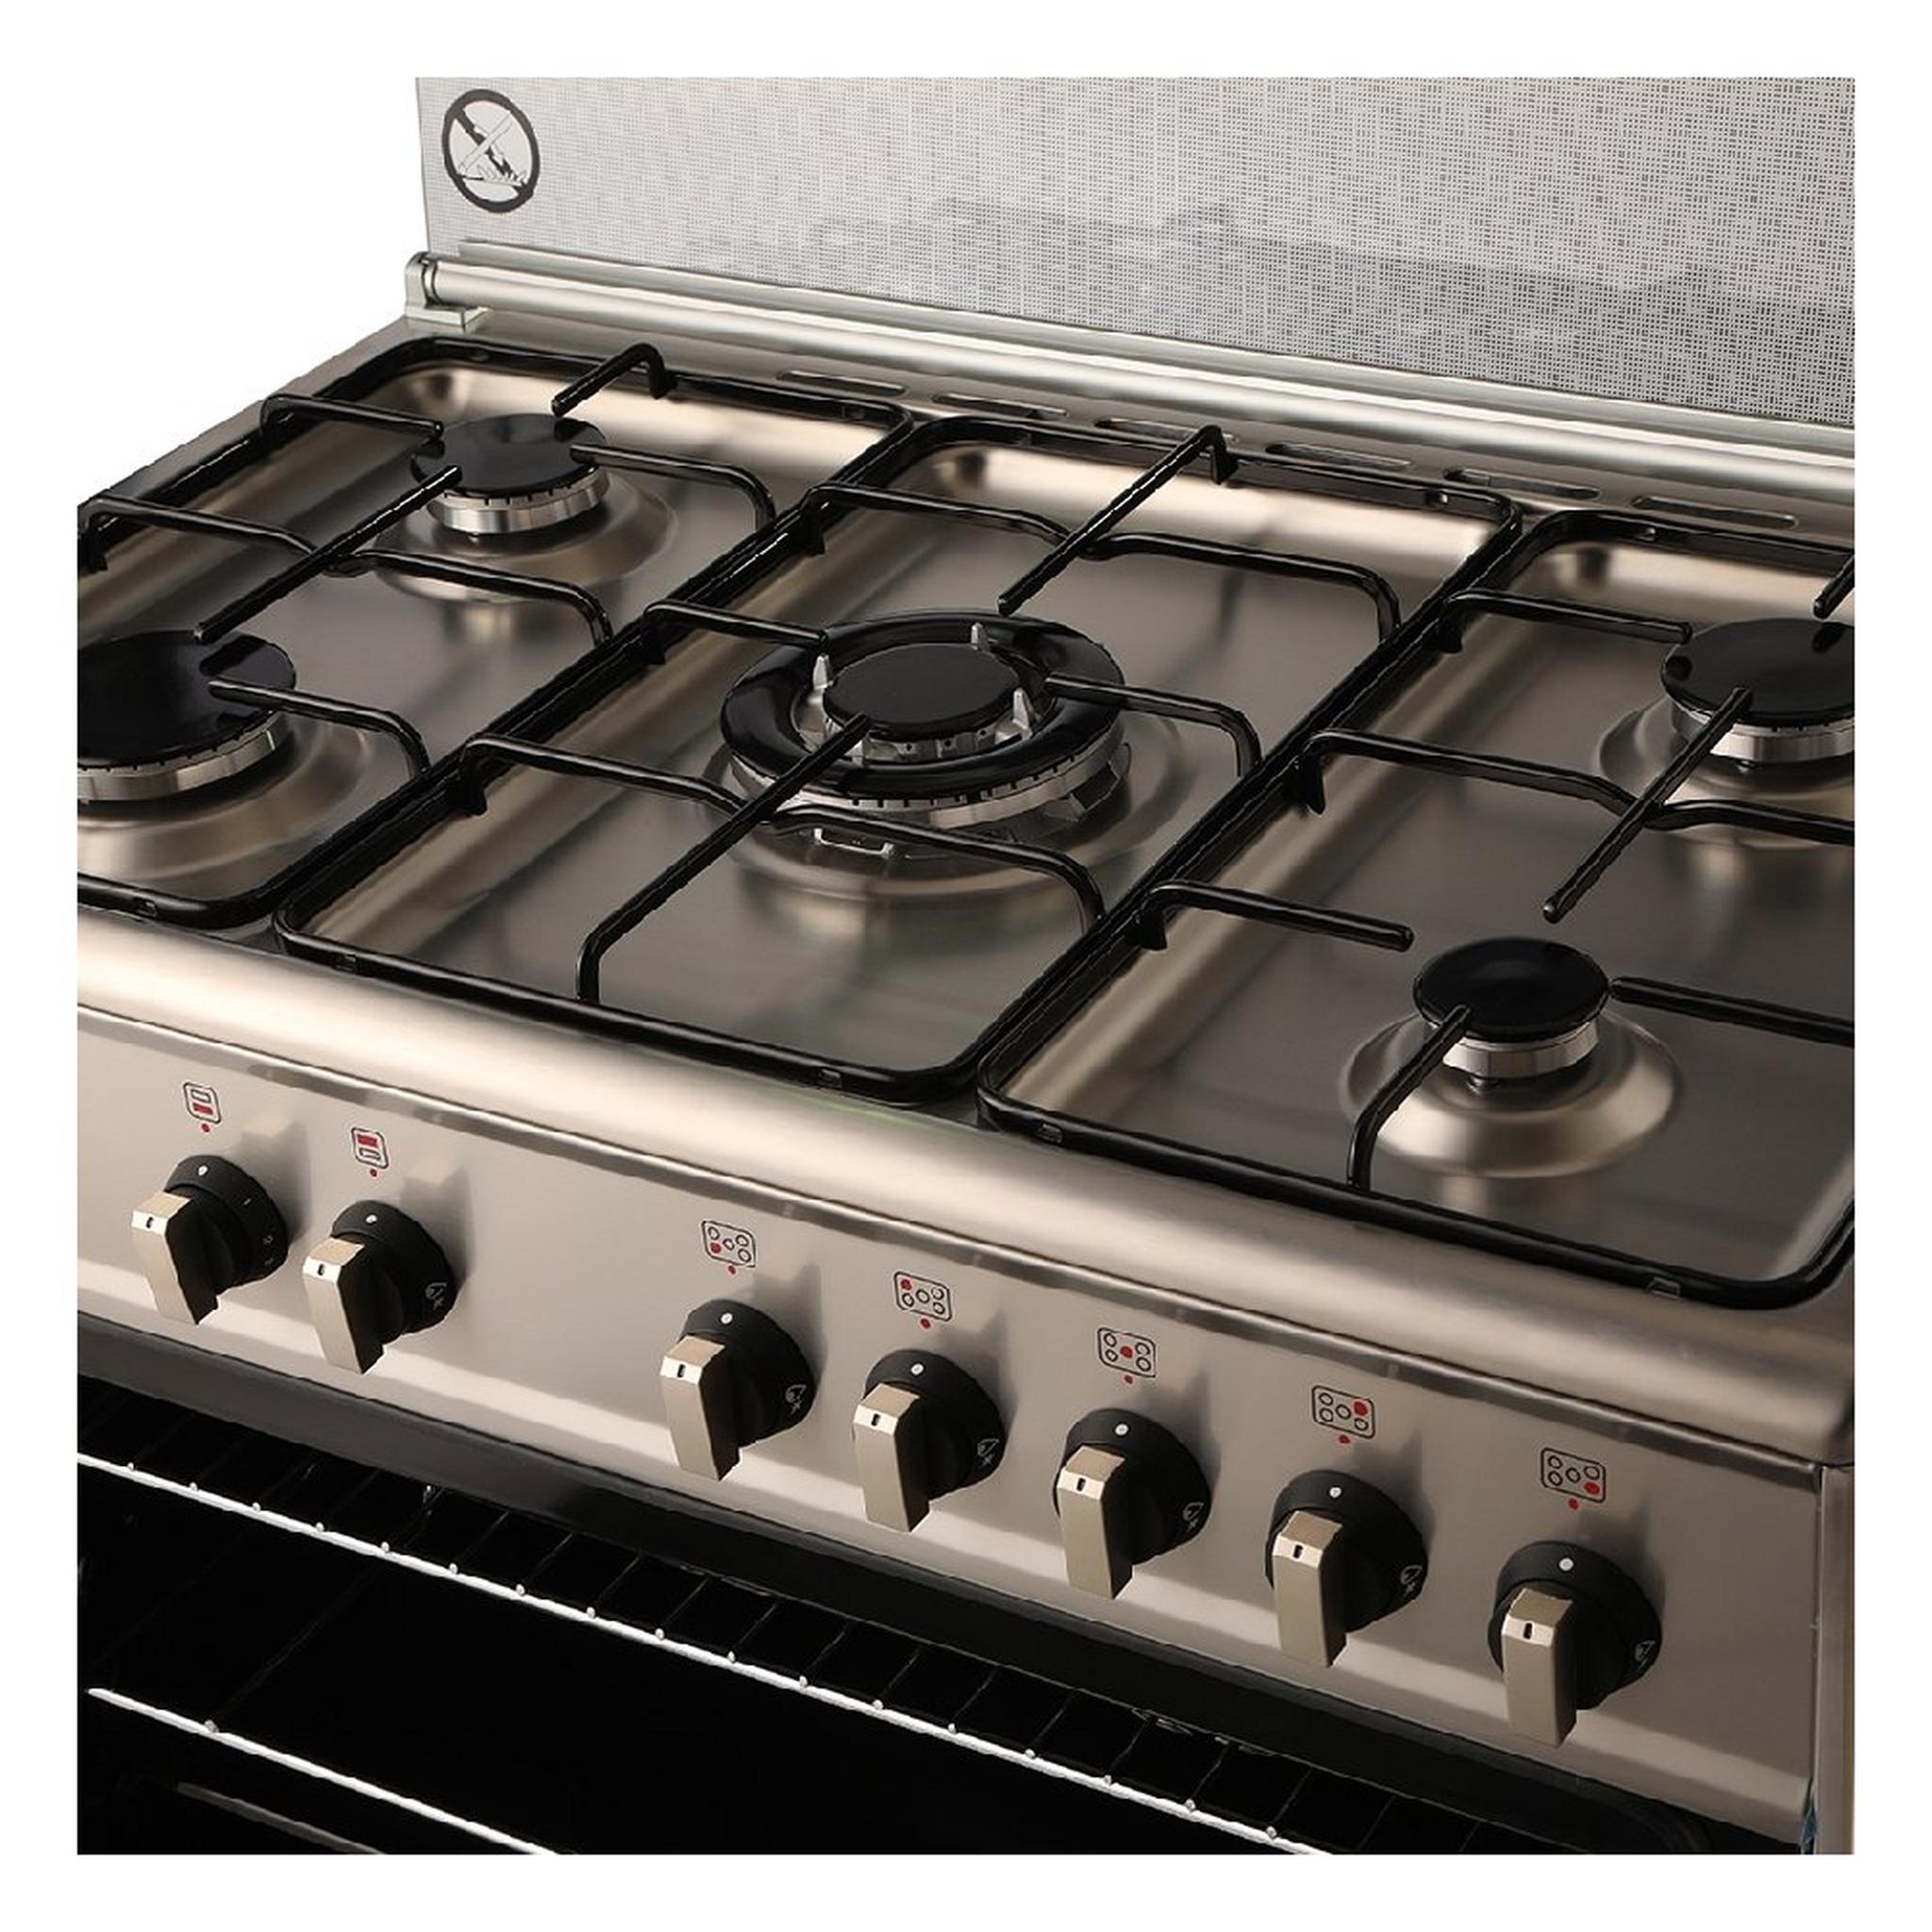 Wansa 90x60cm 5-Burner Floor Standing Gas Cooker (WCI9502214XA) – Stainless Steel